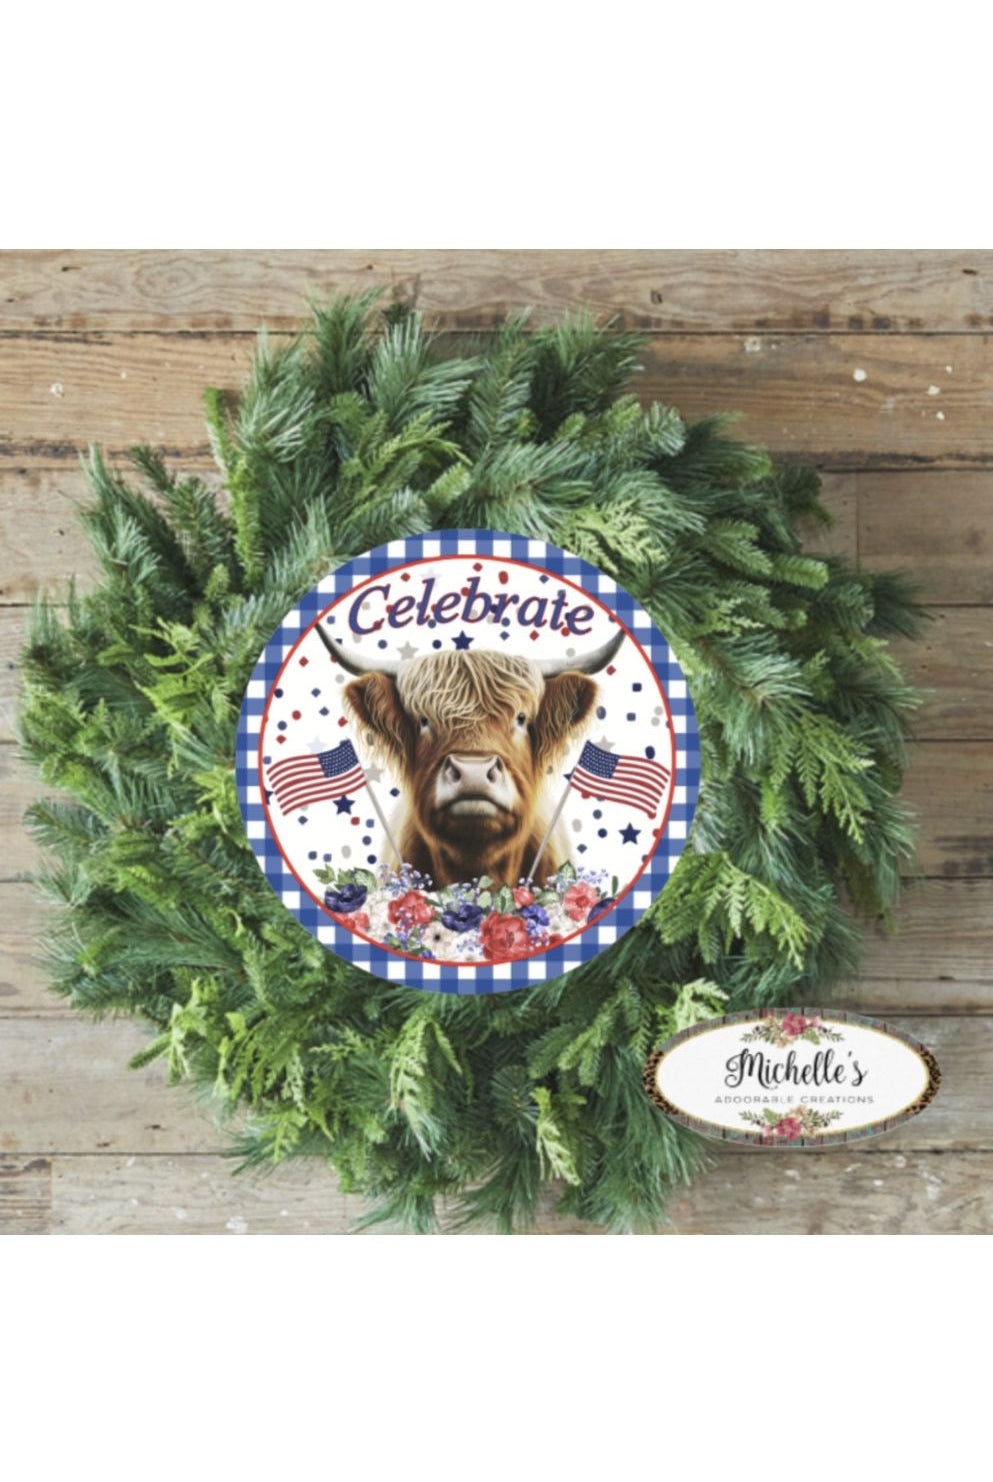 Shop For Celebrate Patriotic Highland Cow Sign - Wreath Enhancement